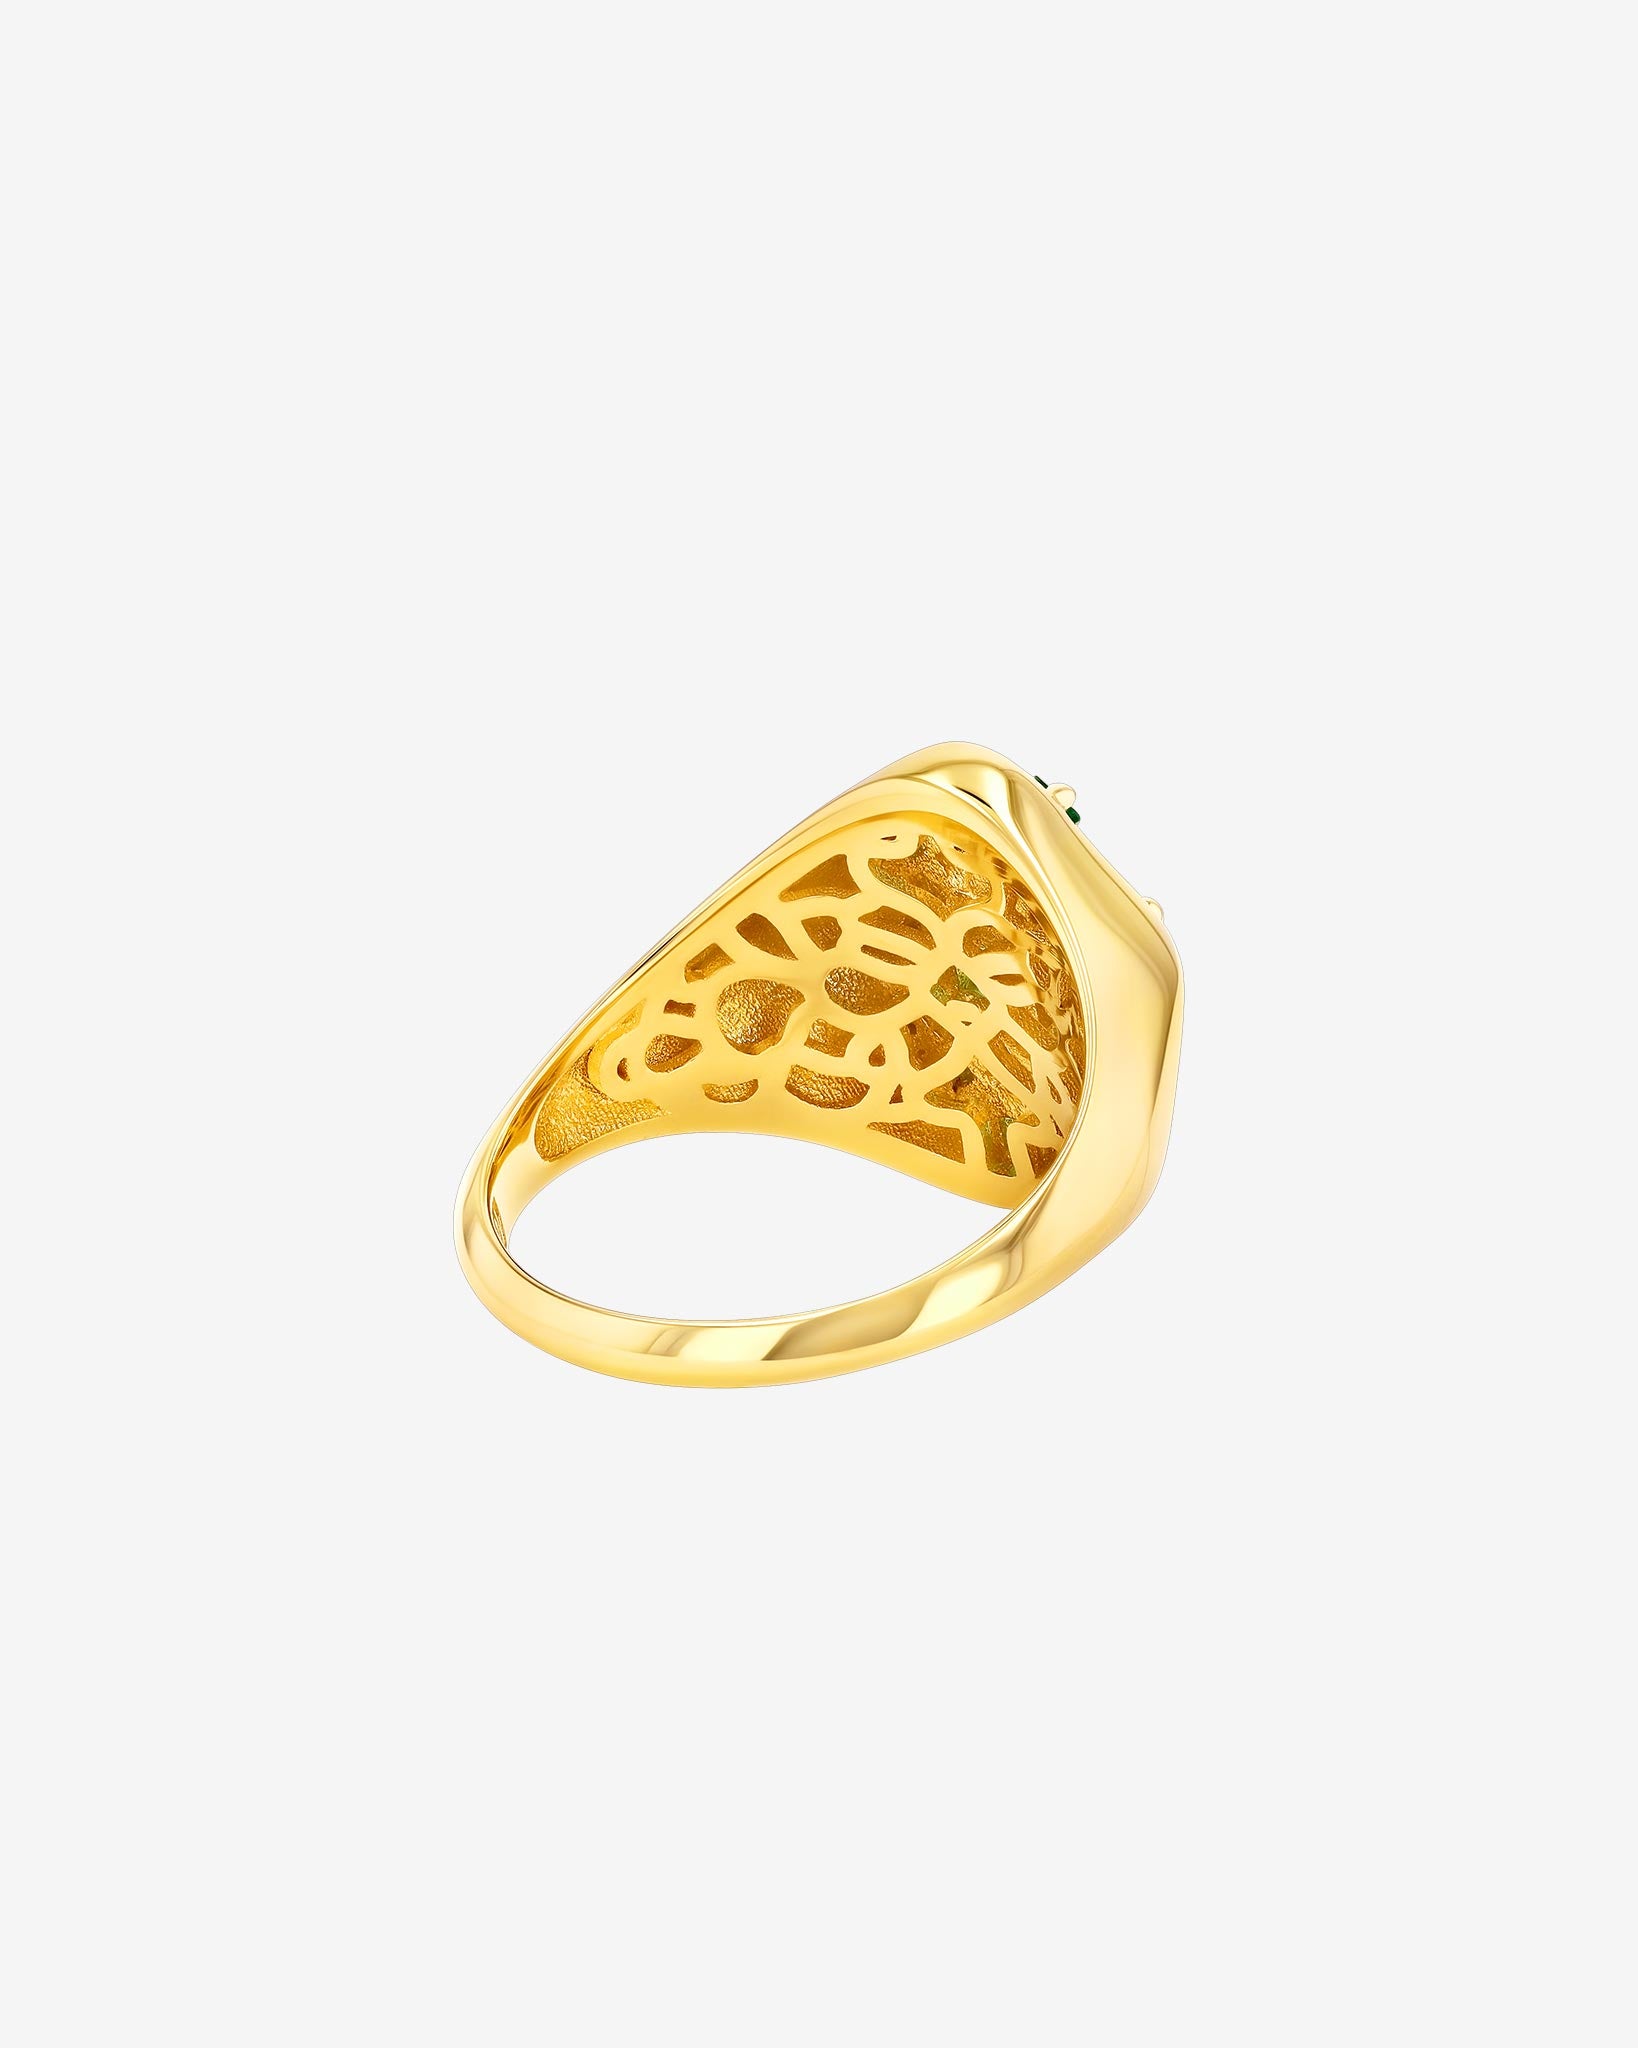 Suzanne Kalan La Fantaisie Star Emerald Signet Ring in 18k yellow gold